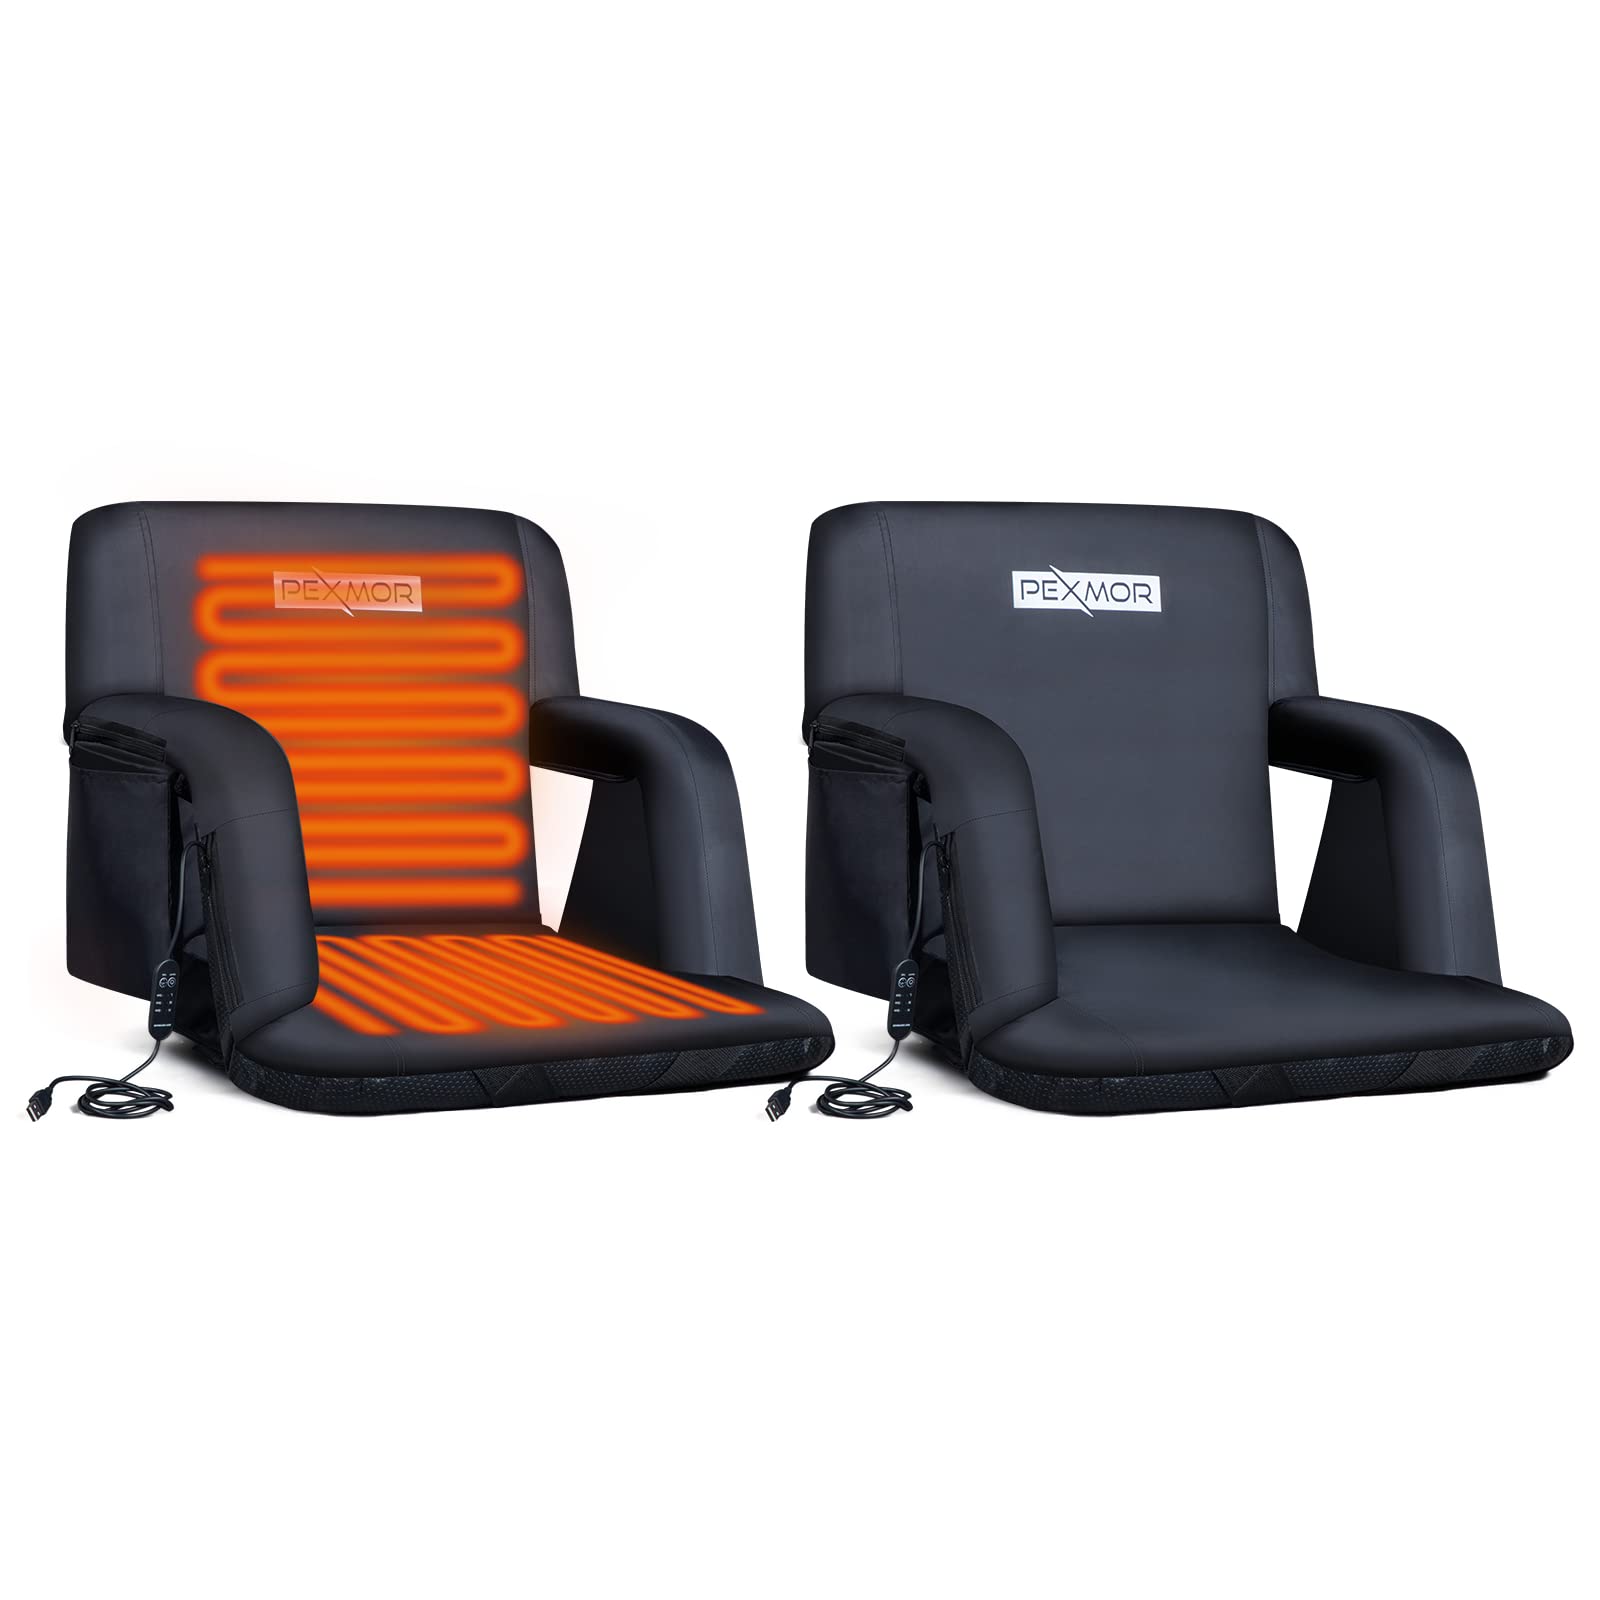 Stadium Seat Cushion, Bleacher Cushion, Portable Waterproof Stadium Pad,  Bleacher Seat Pads